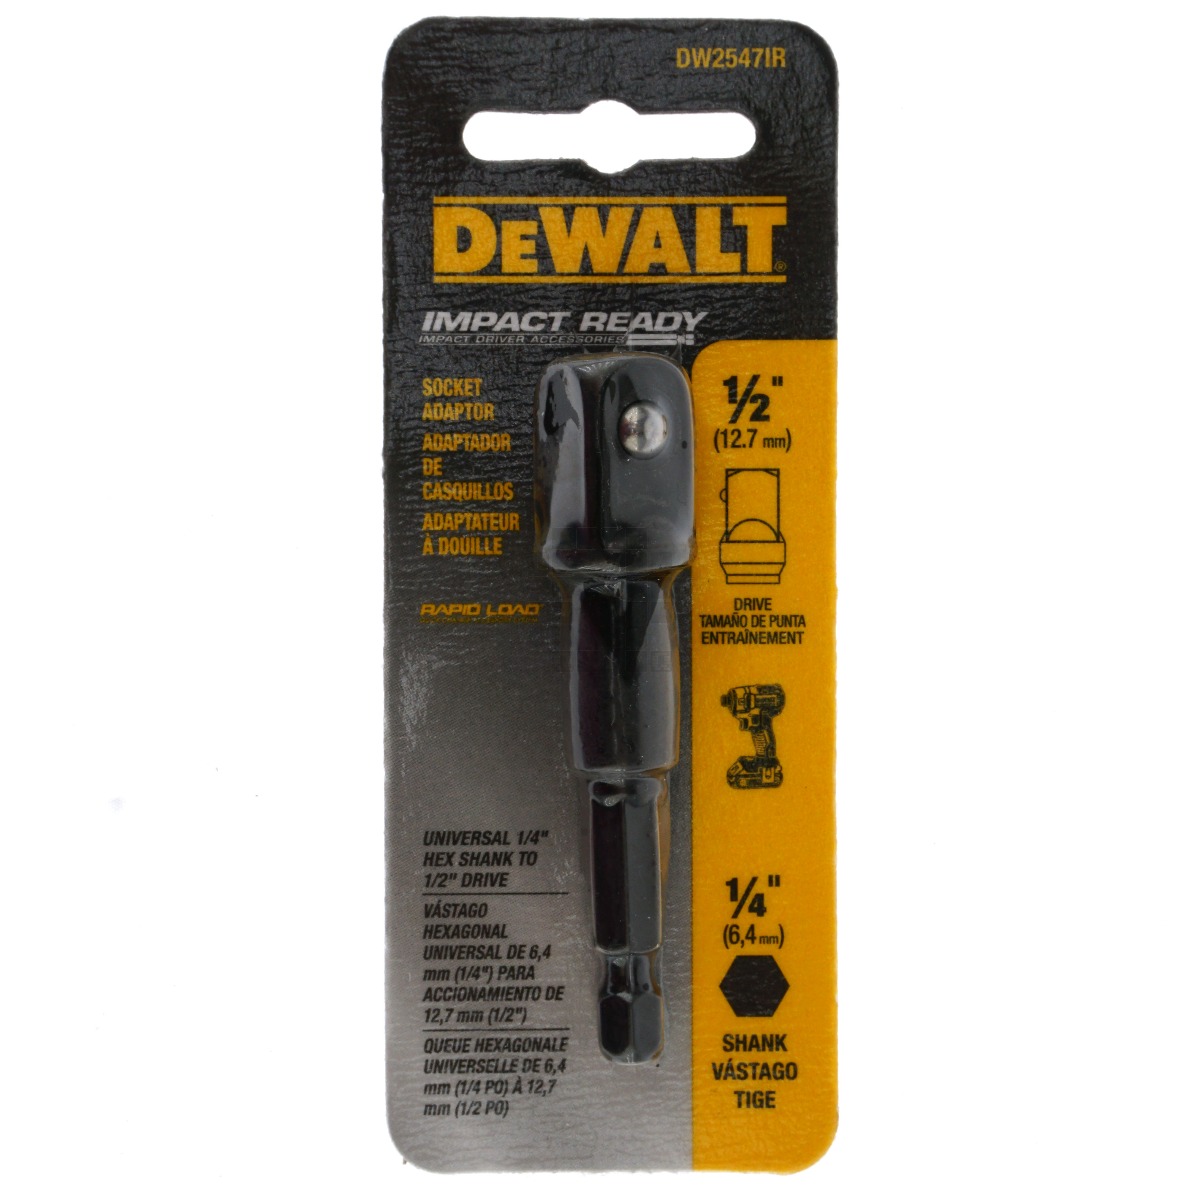 Dewalt DW2547IR 1/4" Hex to 1/2" Square Impact Ready Socket Adapter